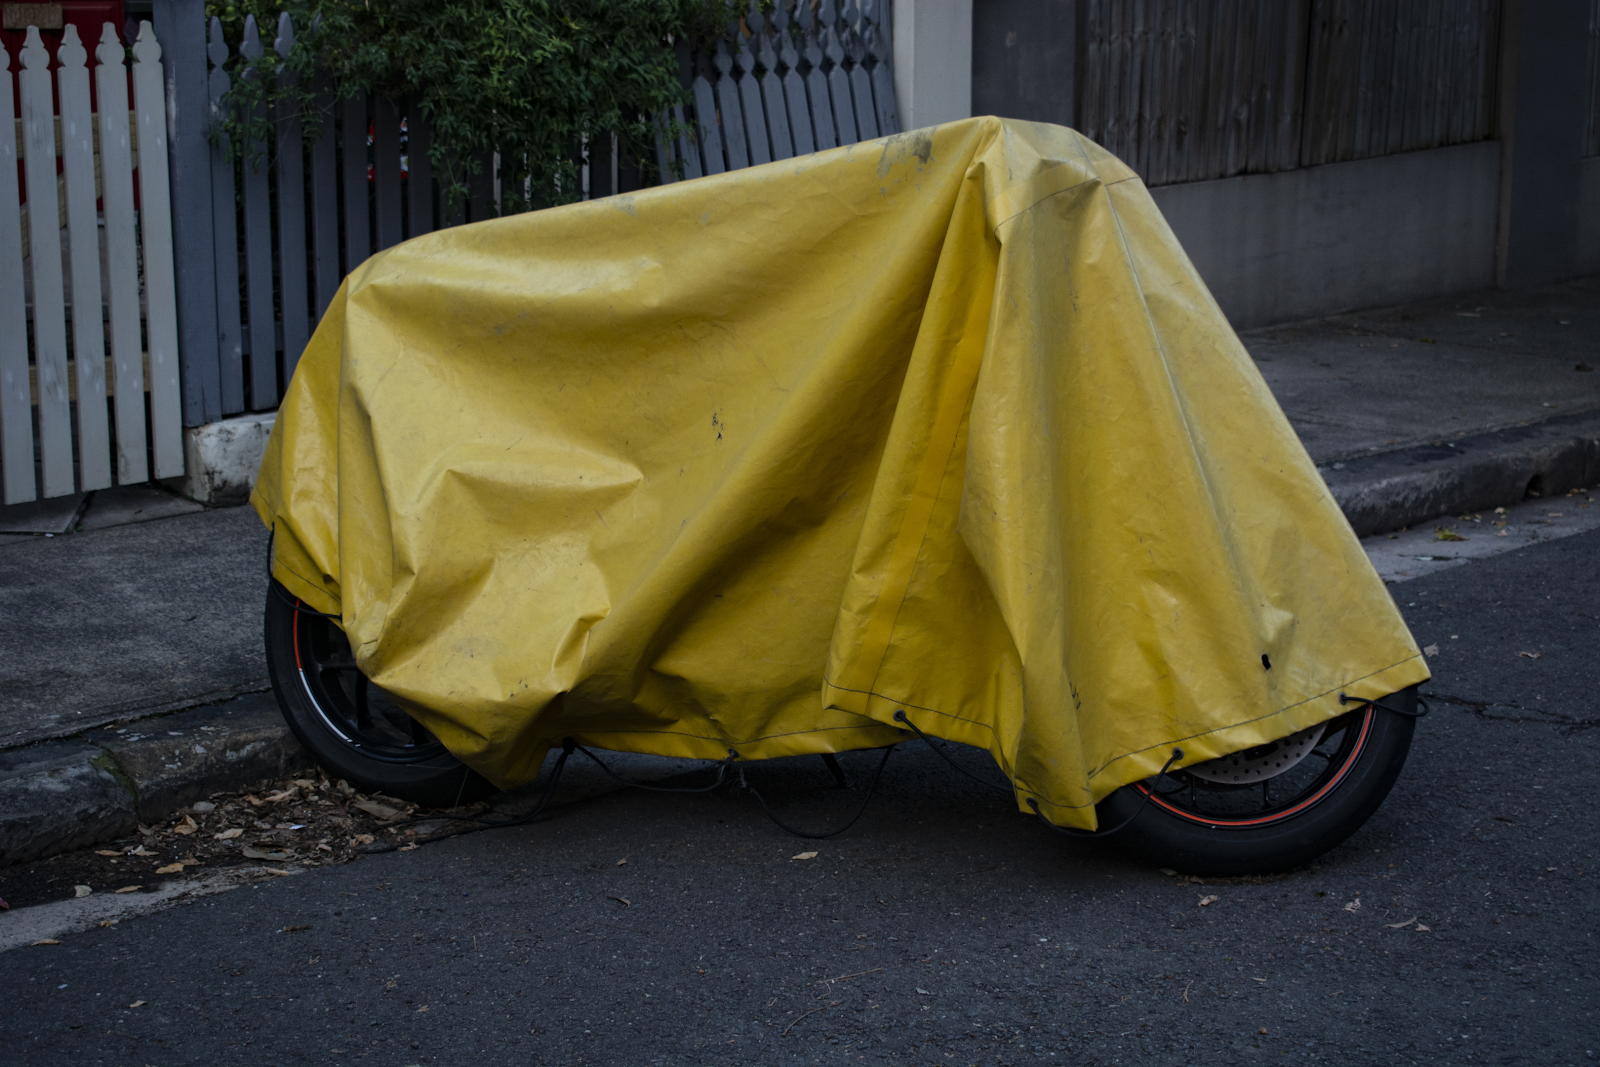 Bild von Wirestock auf Freepik - https://www.freepik.com/free-photo/yellow-tarp-cover-parked-motorcycle-street_12909662.htm